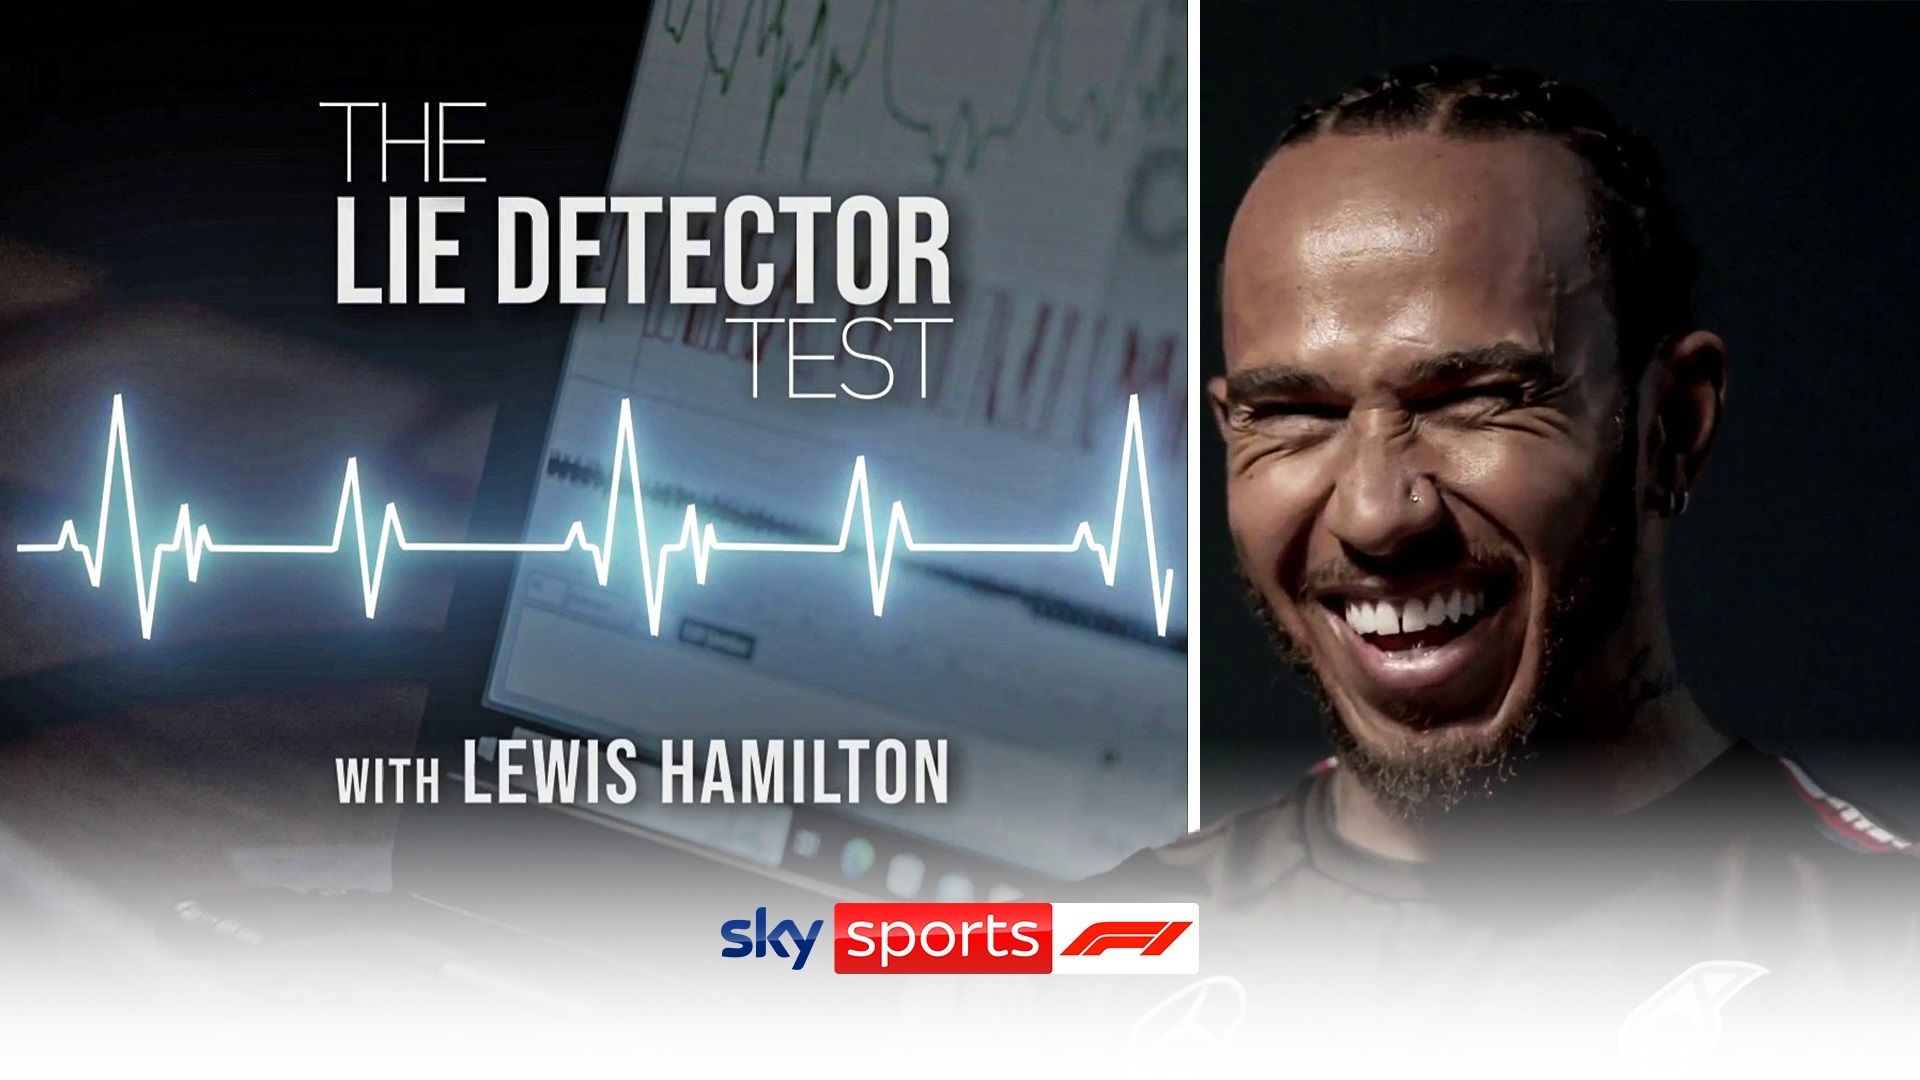 Hamilton takes on the lie detector!